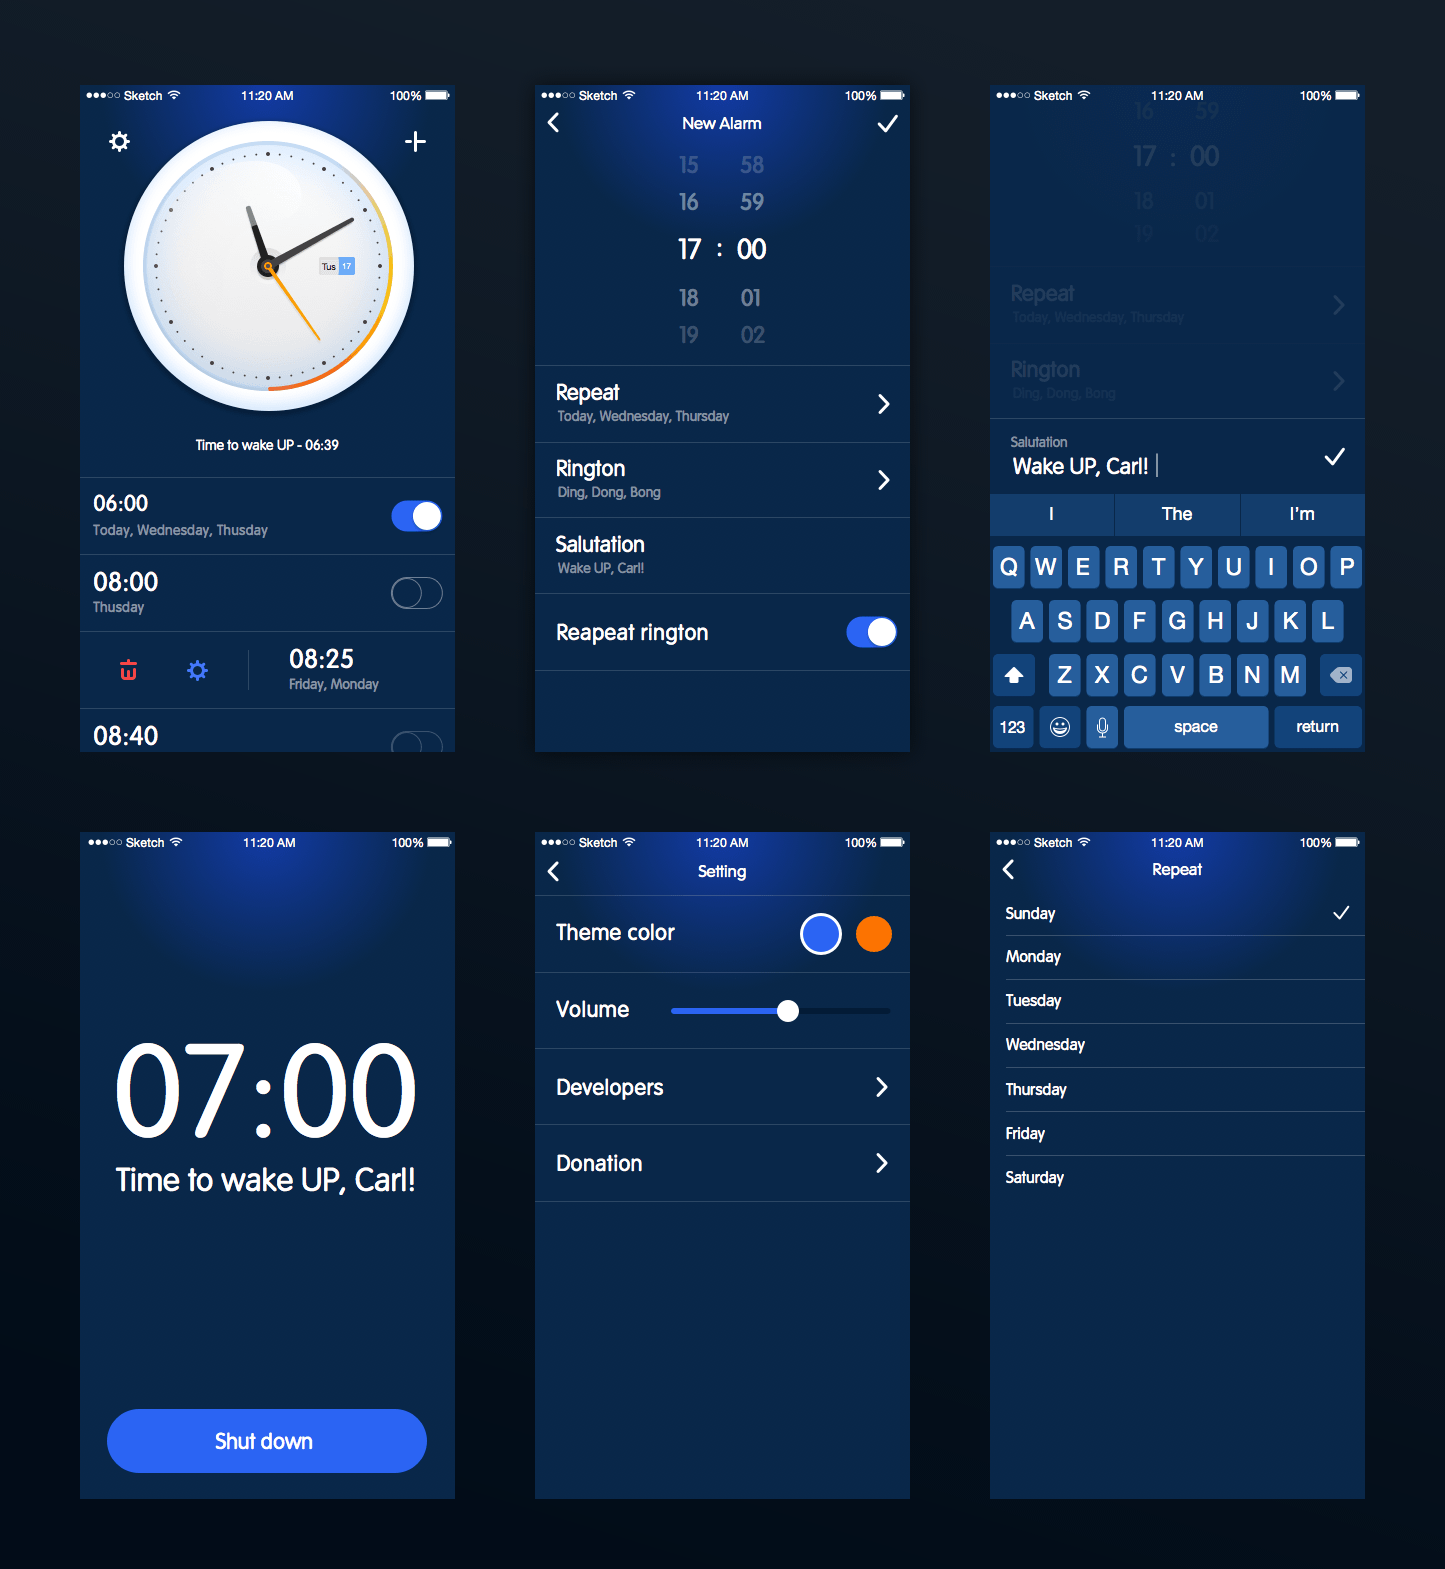 Complete Alarm Clock App